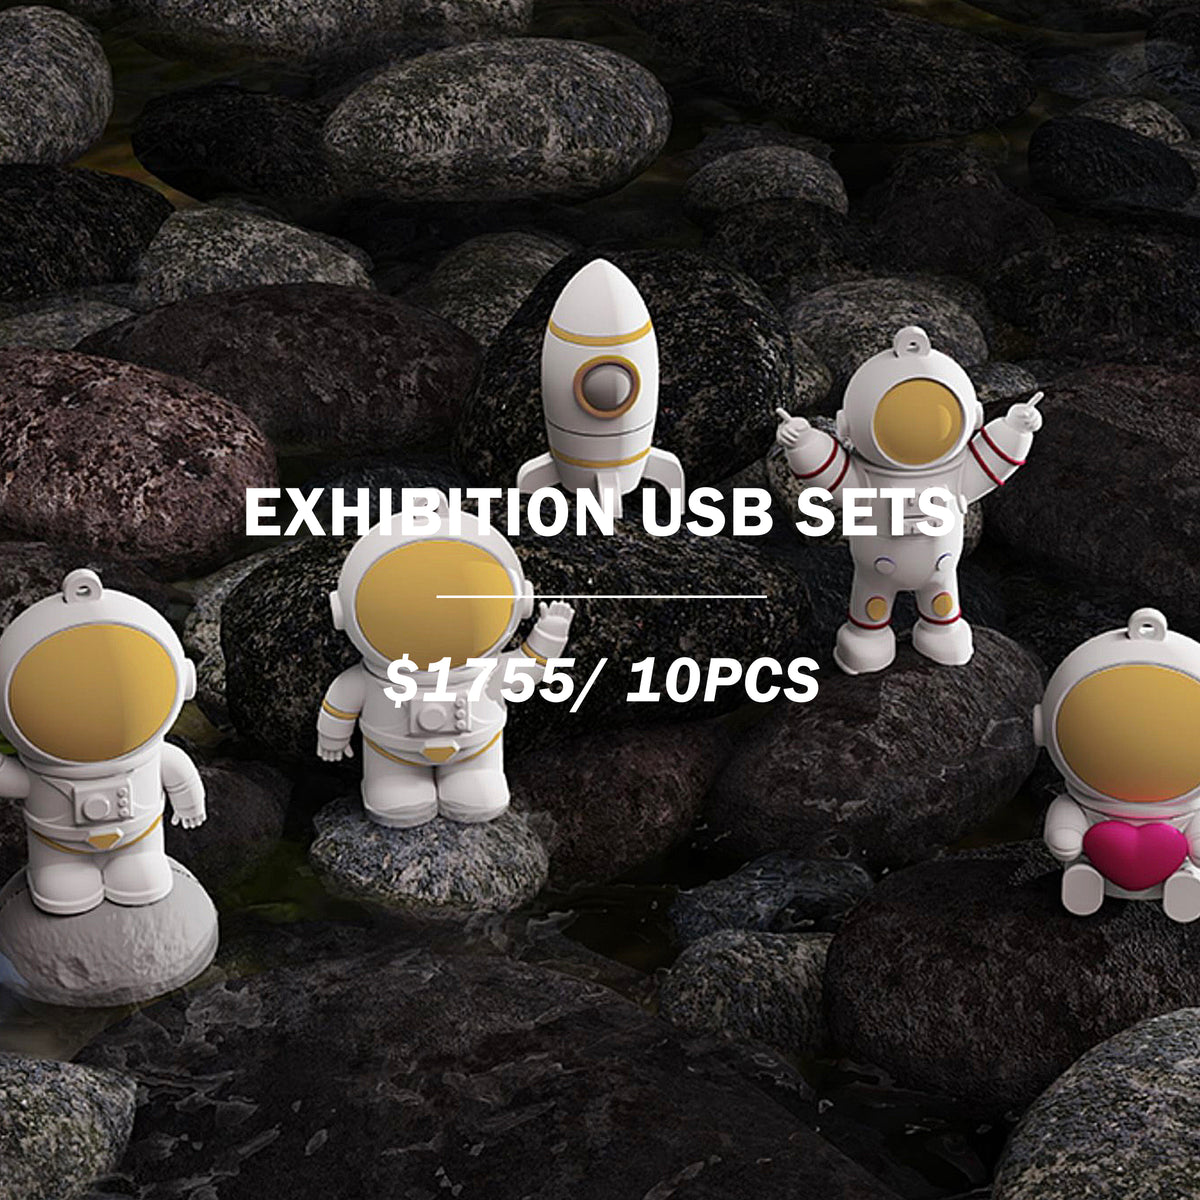 【EXHIBITION GIFTS】Creative usb & astronaut usb printing logo x 10 pcs  | 創意可愛U盤10件套訂製 宇航員U盤訂製